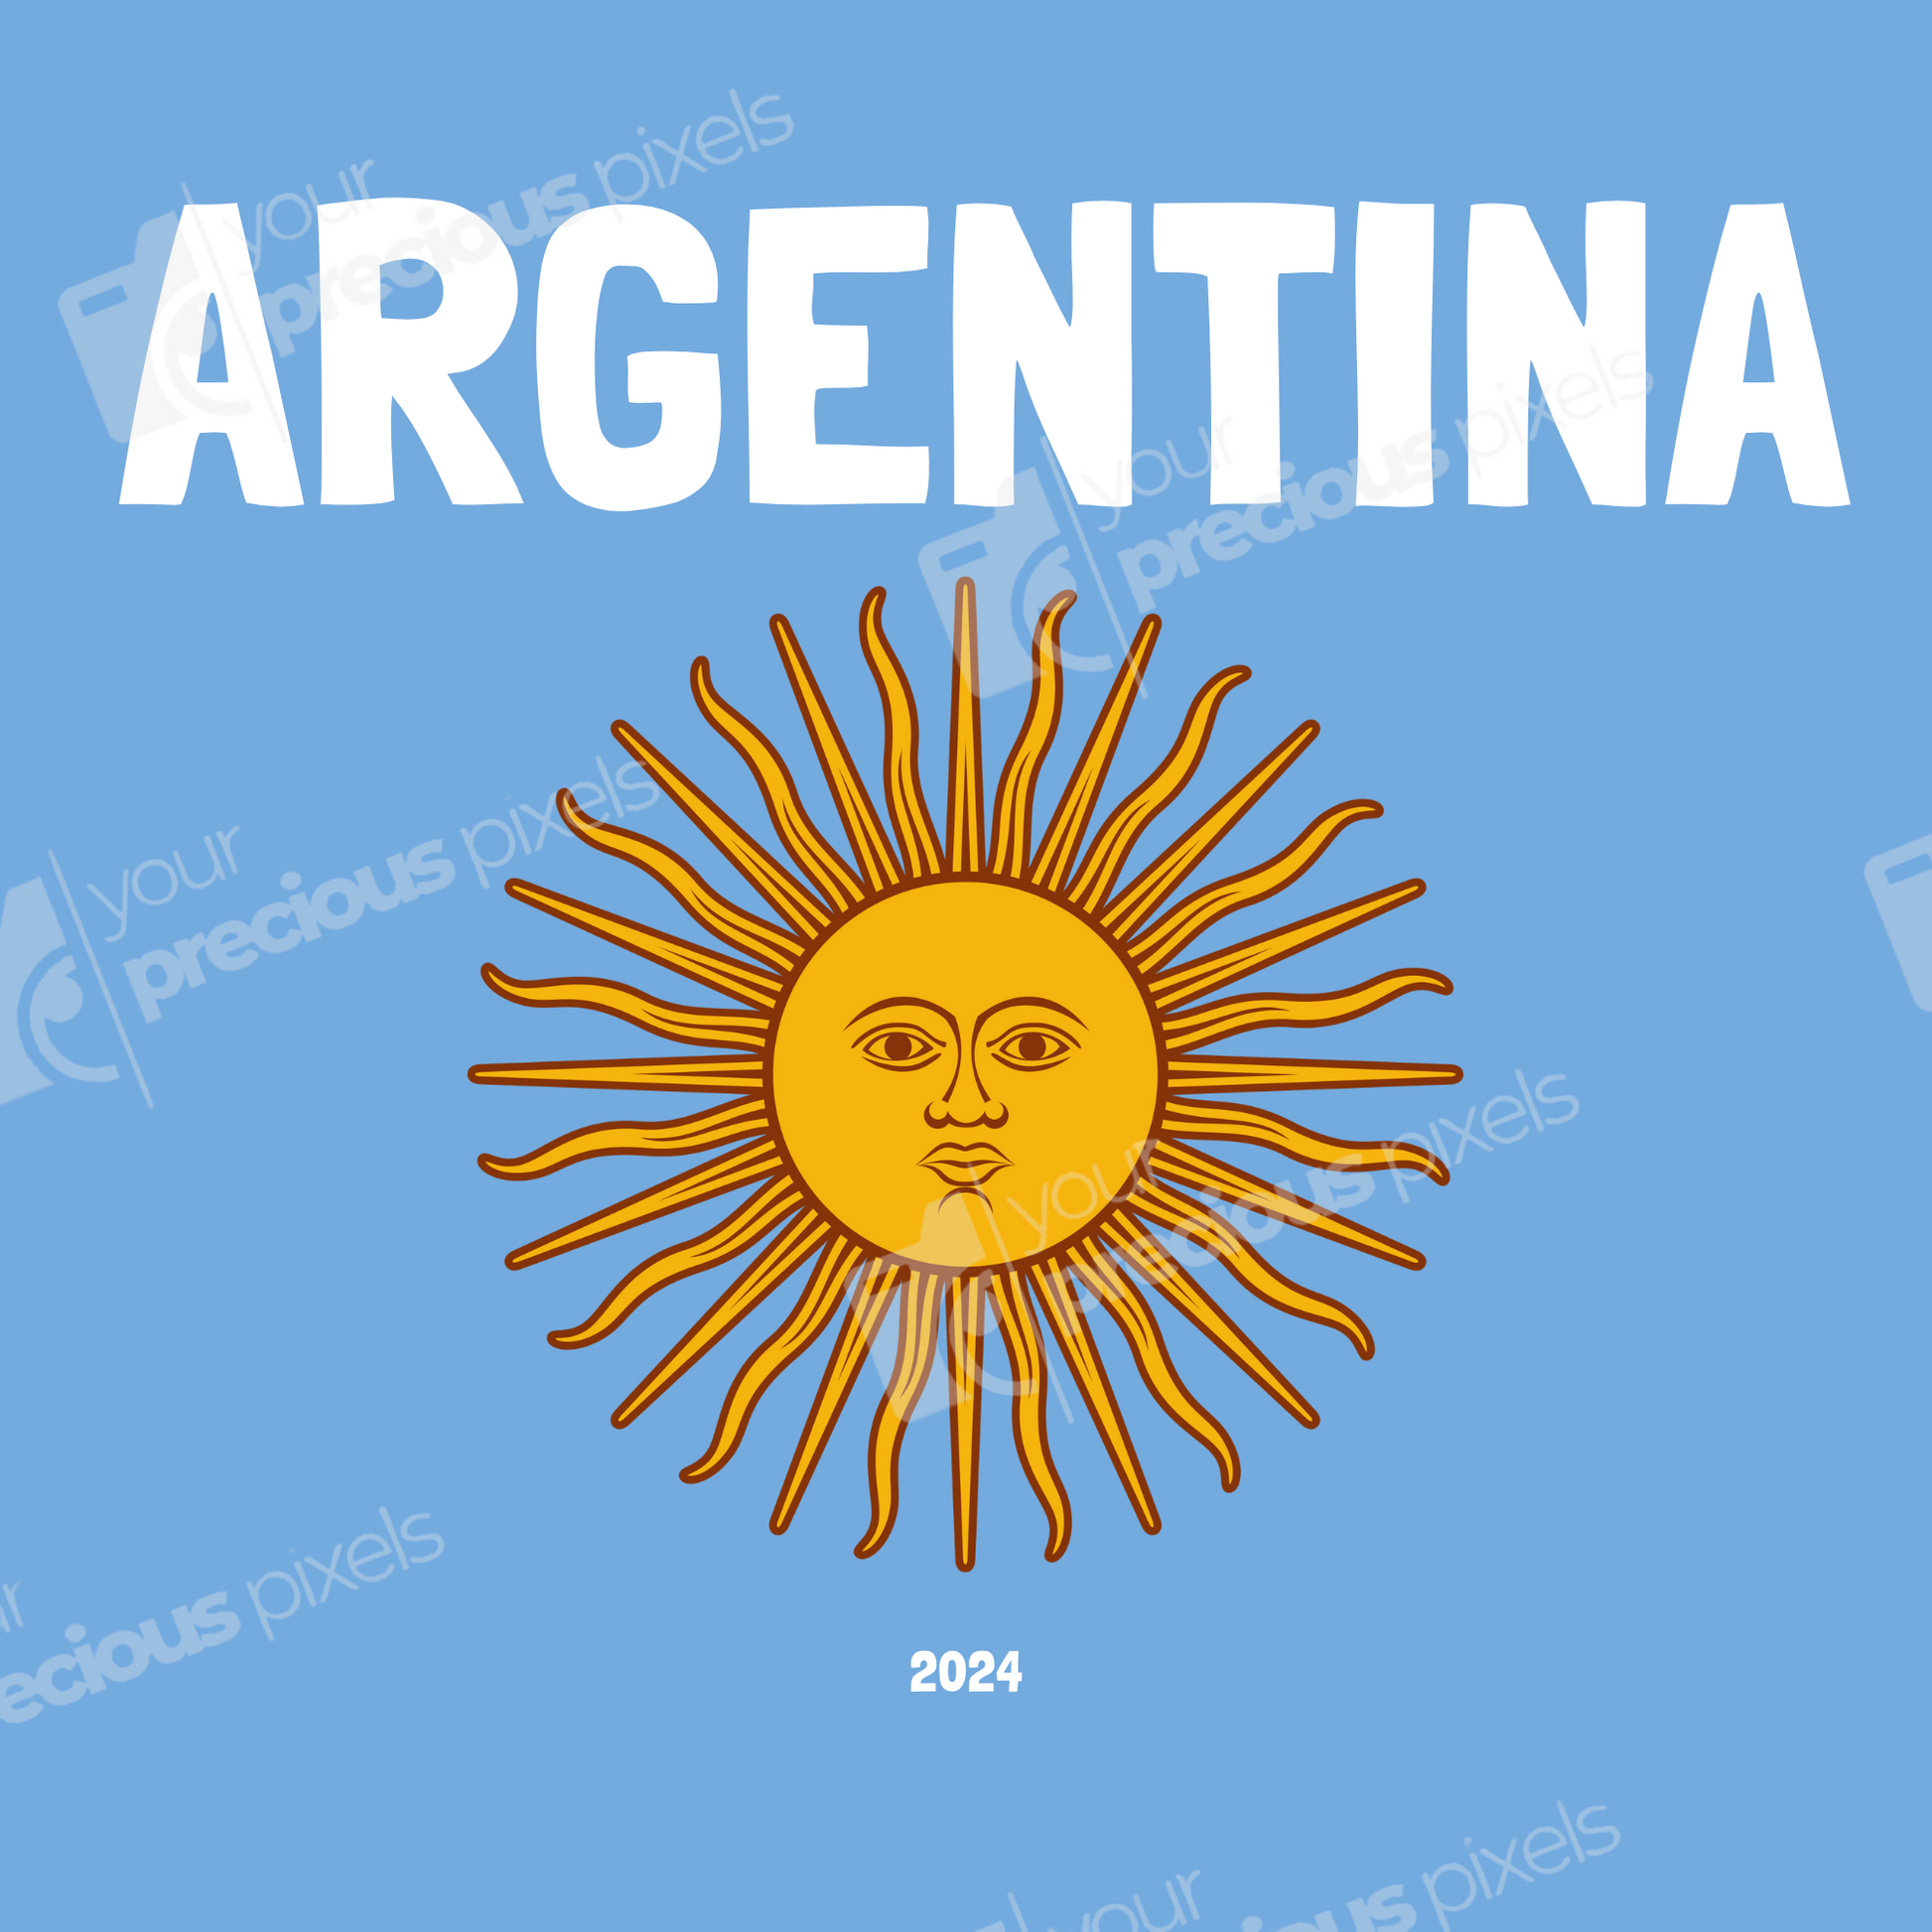 Argentina Photo Book Template